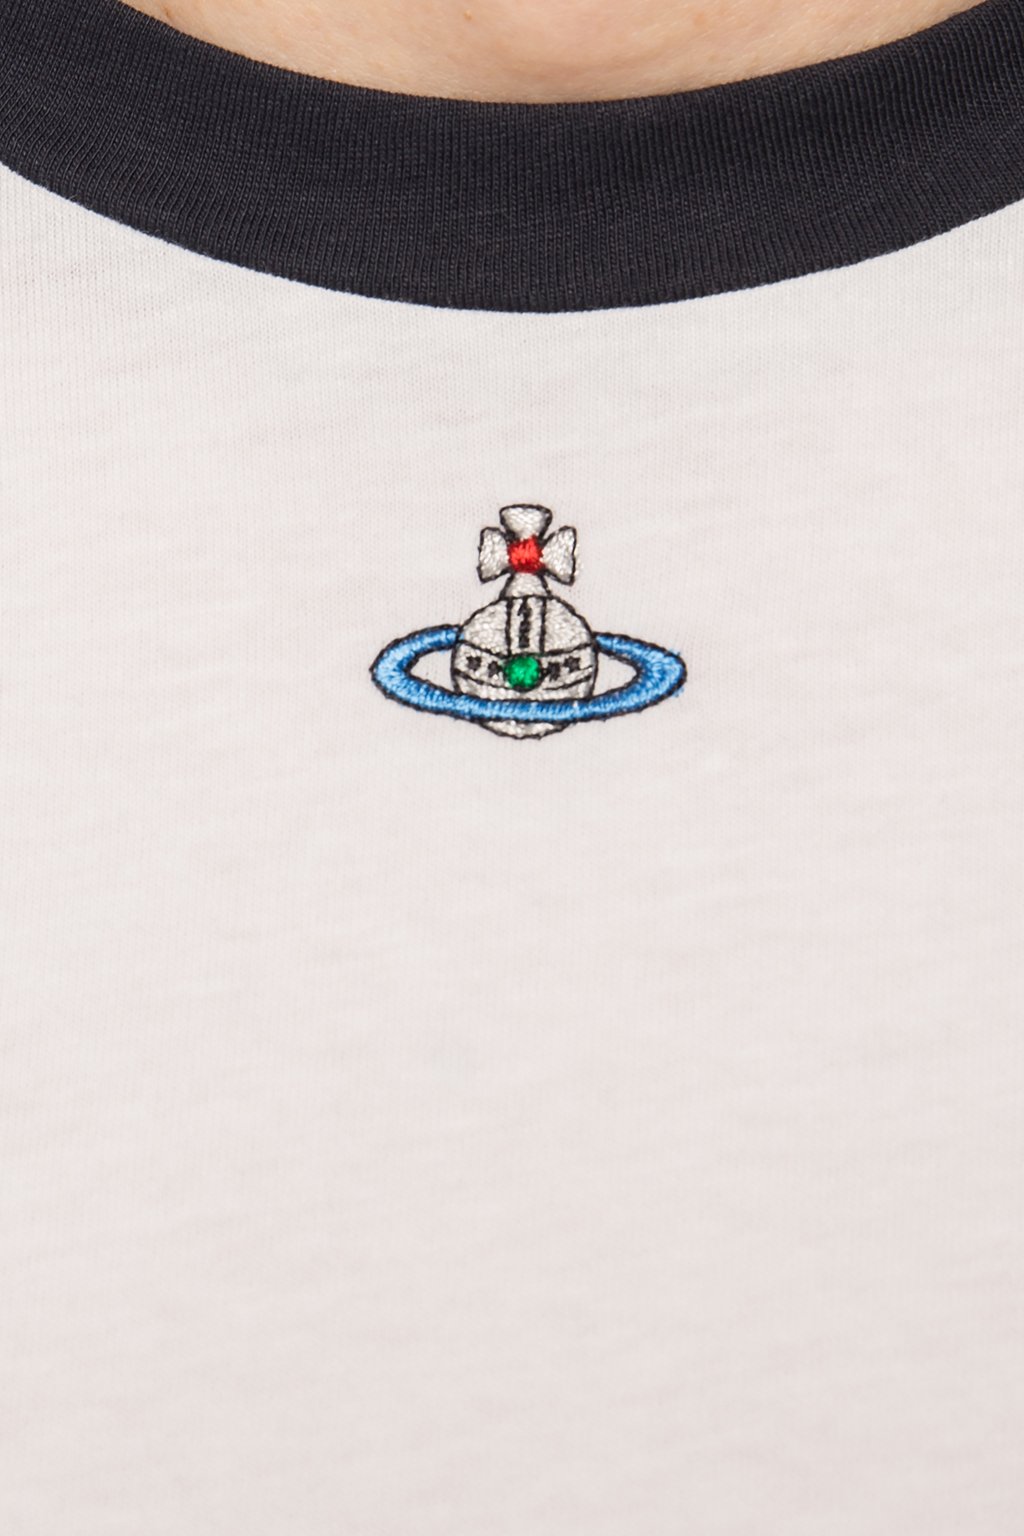 Louis Vuitton Vivienne Navy Logo Shirt